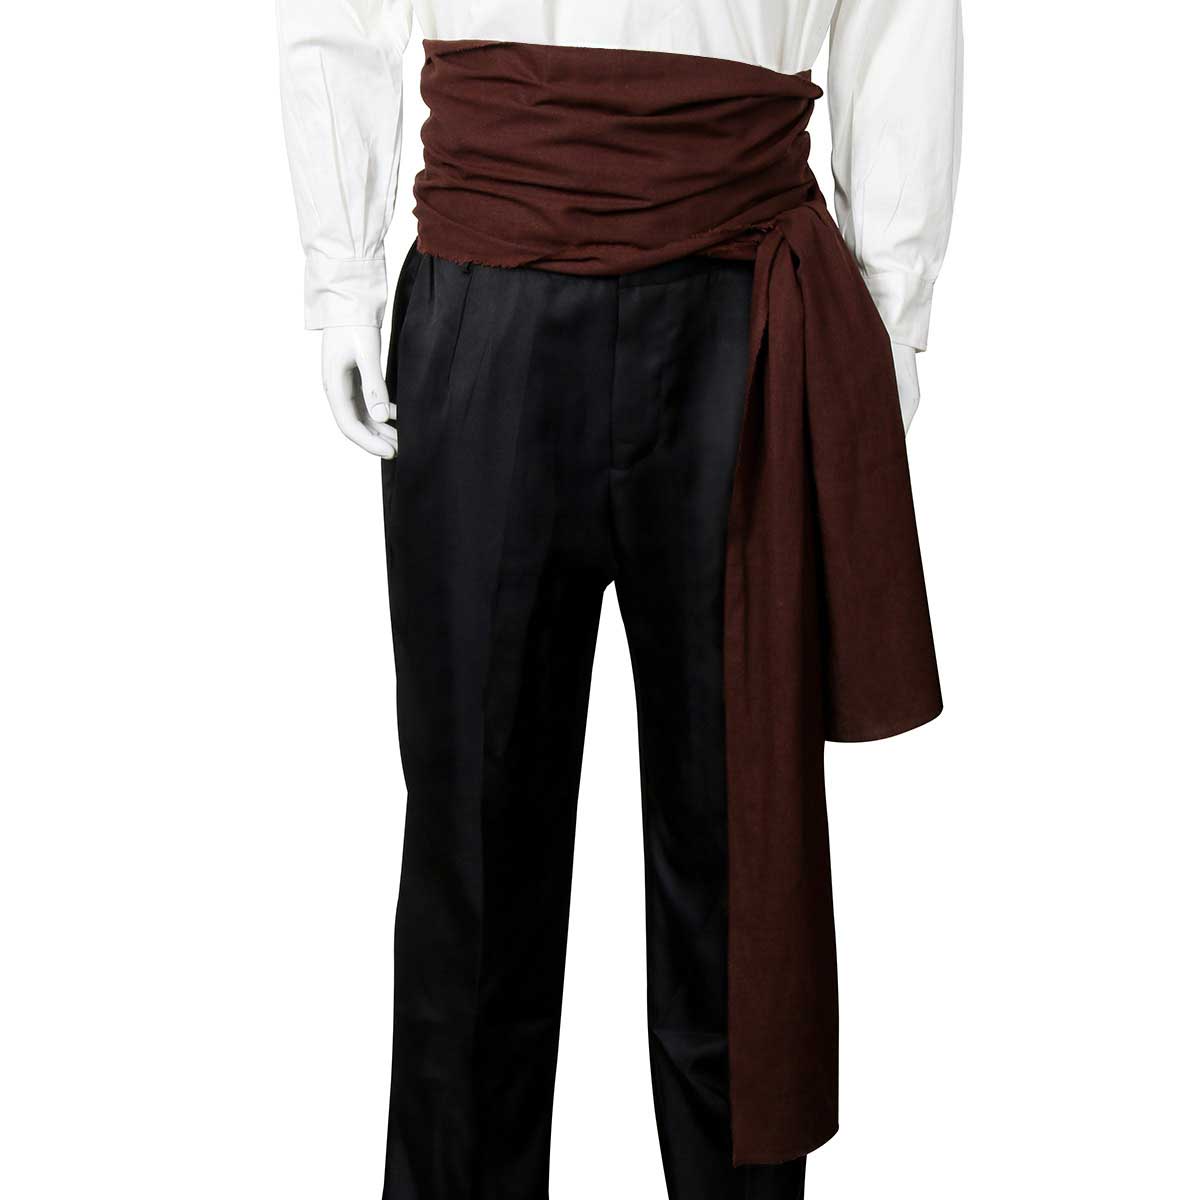 The Pirate Medieval Renaissance Sash Halloween Cosplay Props Costume Large Sash Belt